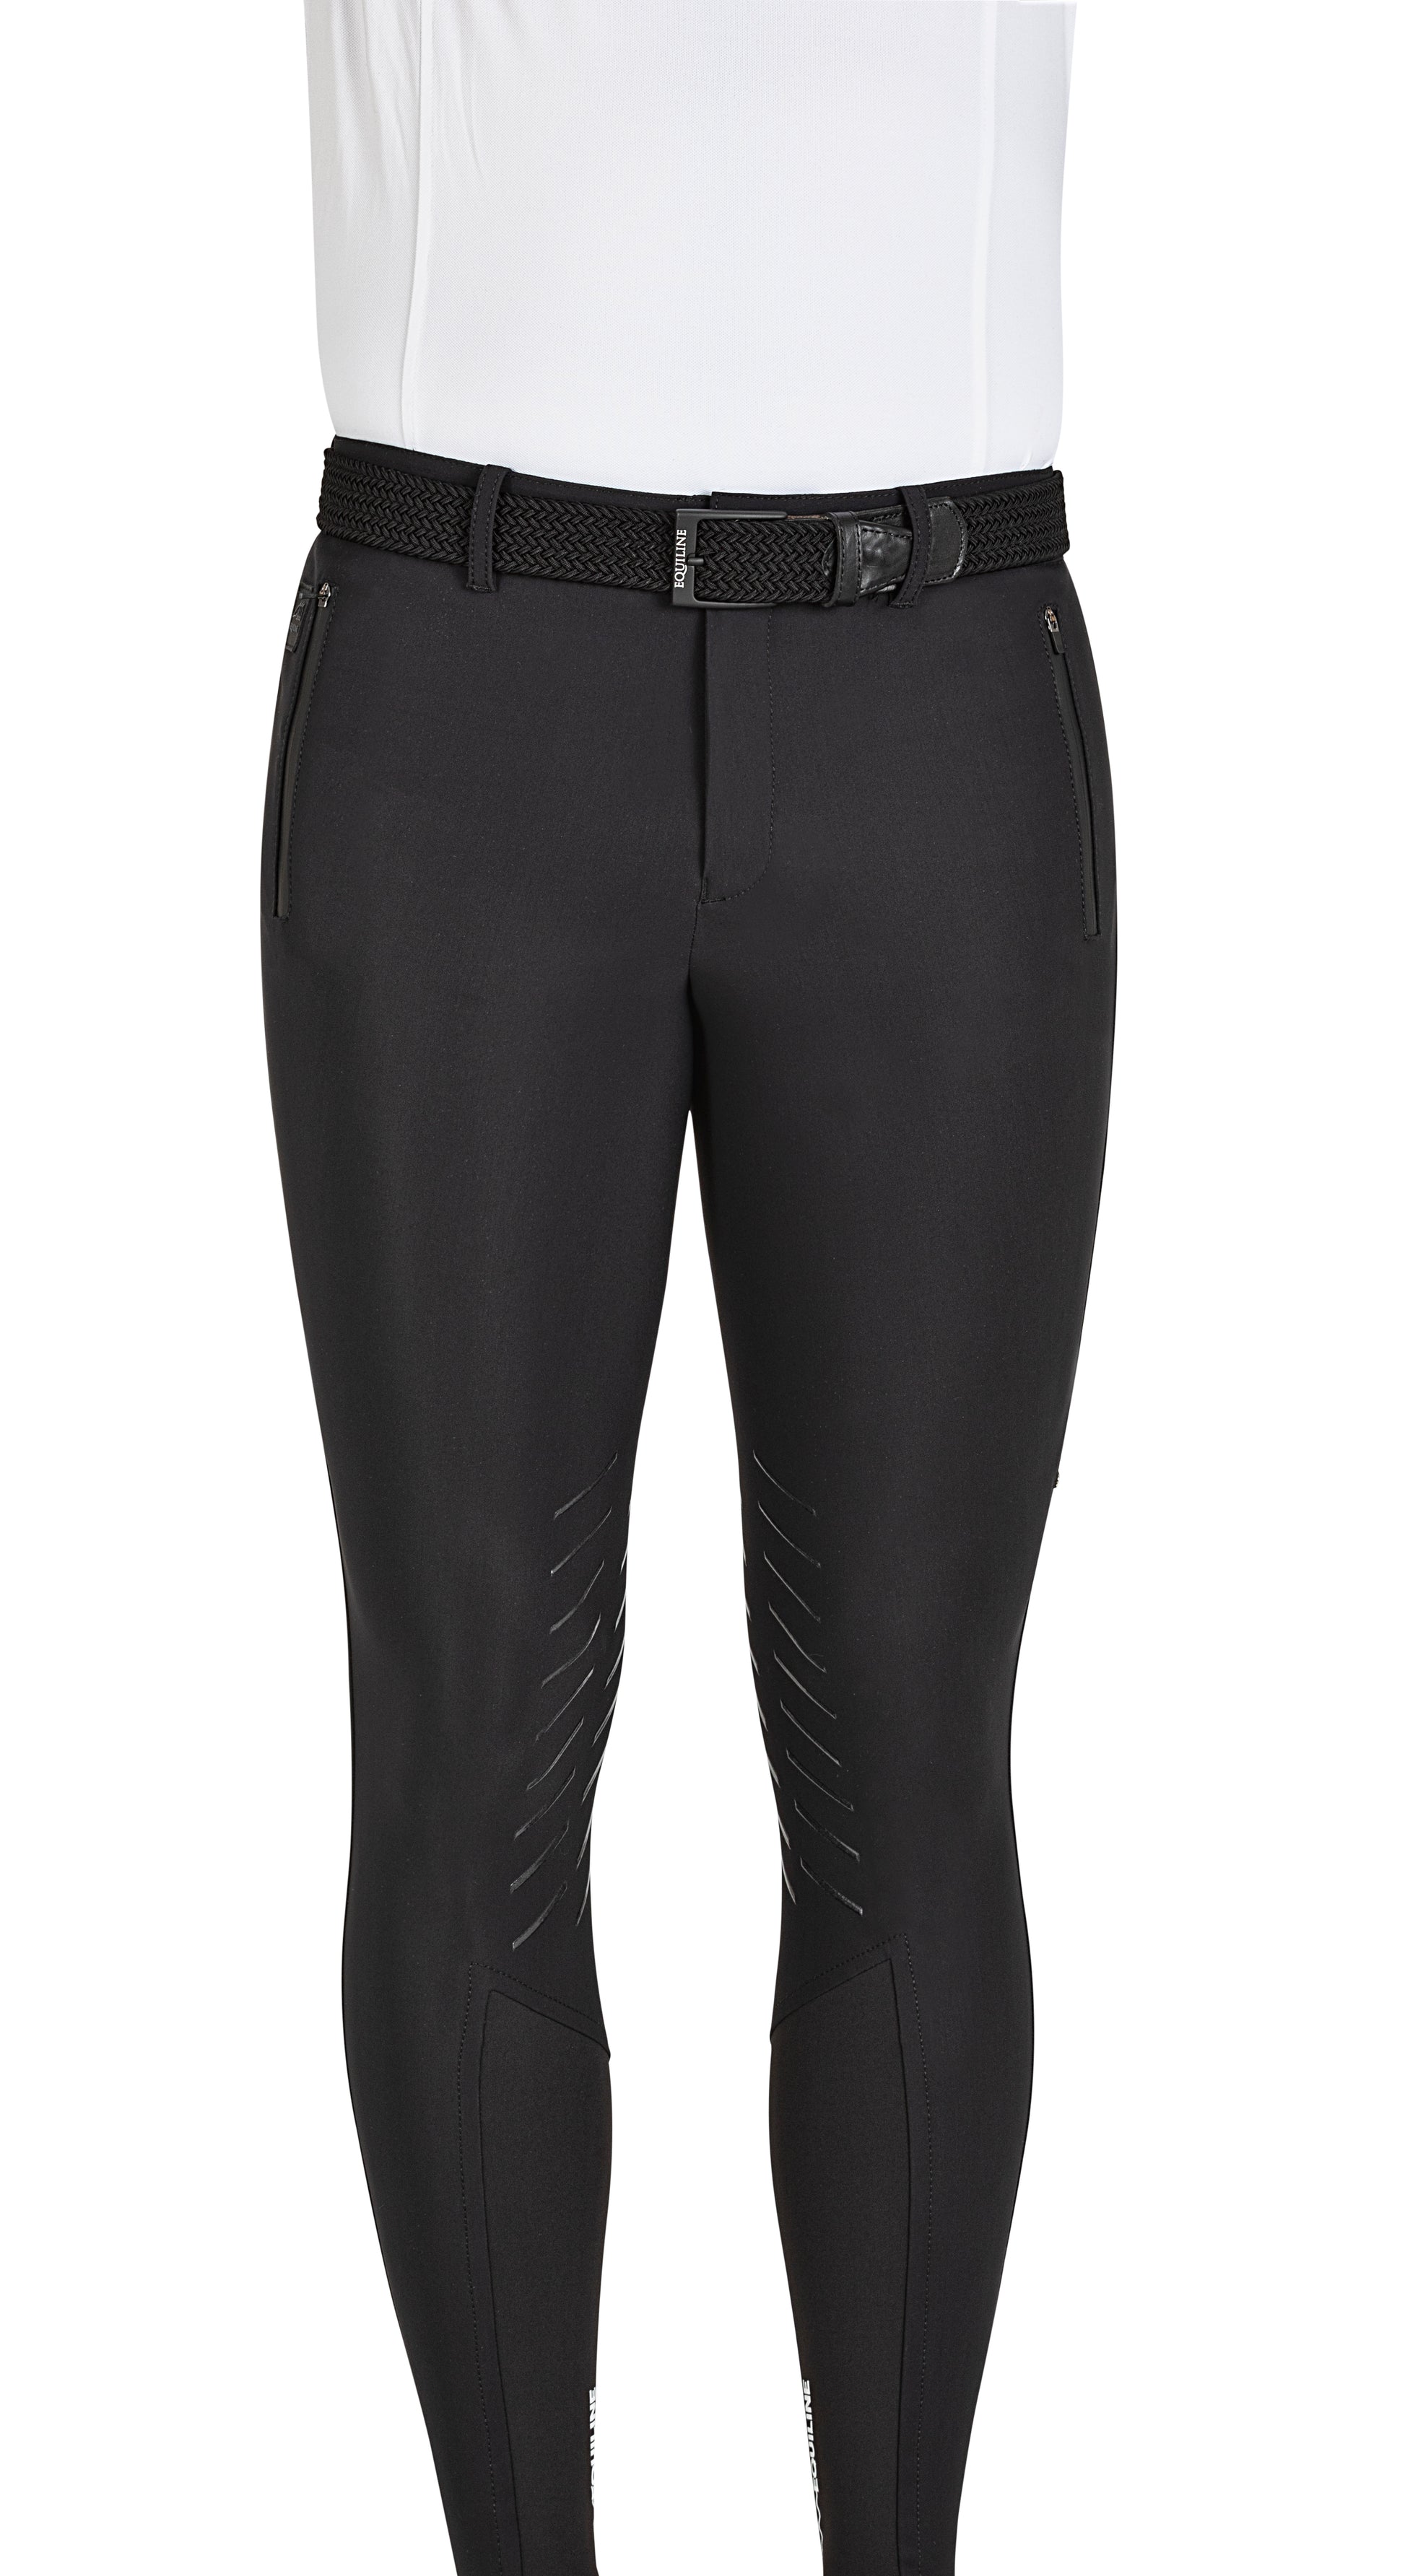 Nuovo Pantalone Uomo "Credek" Equiline Collezione 2022 | El gaucho store